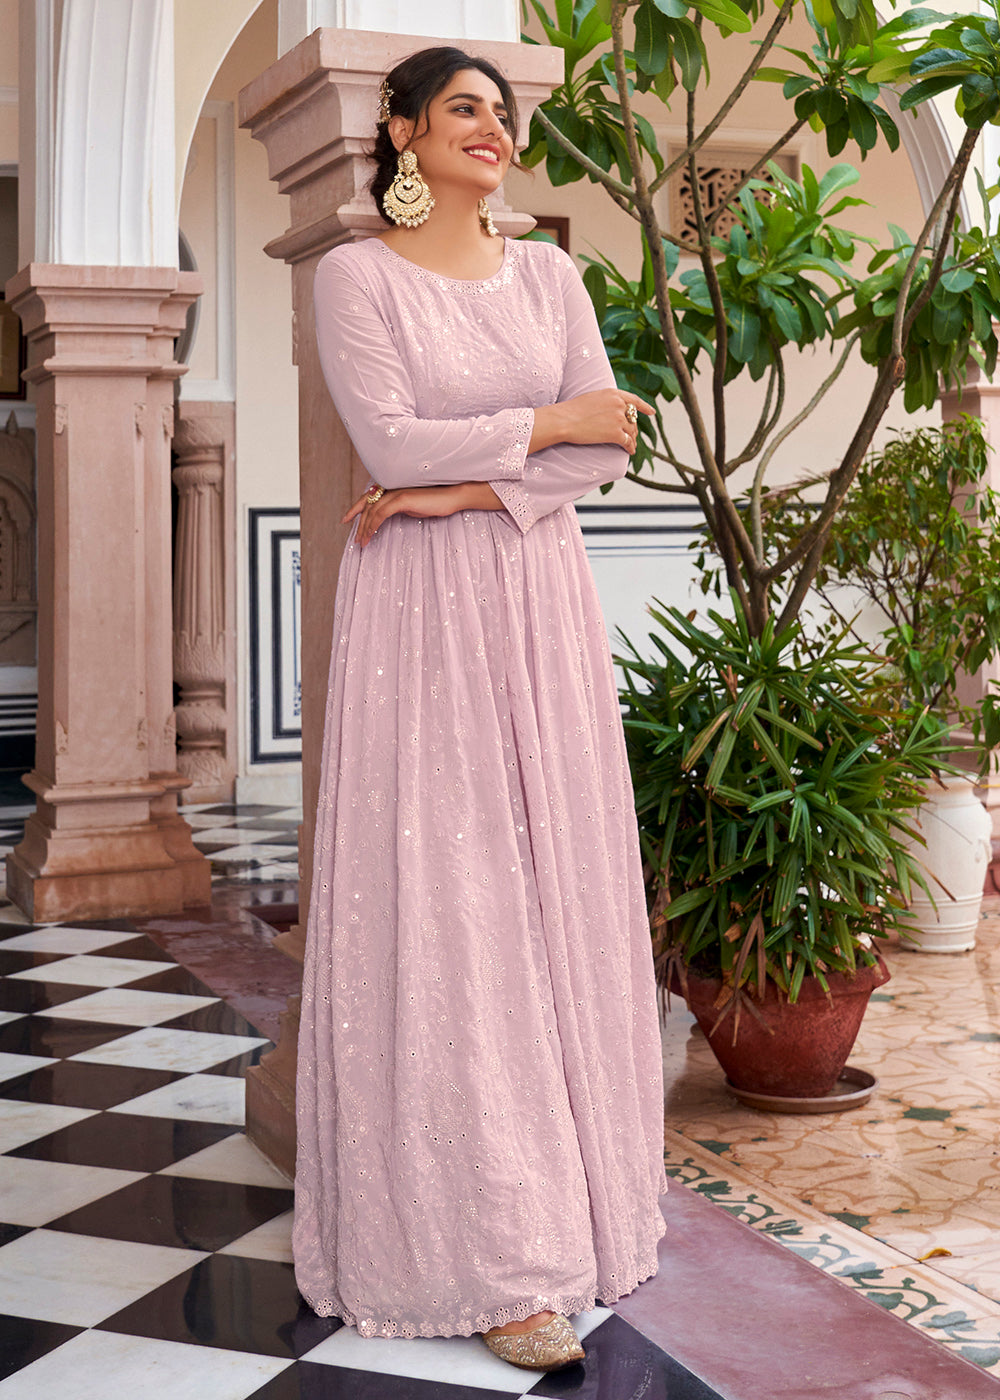 Buy Now Blush Pink Pretty Embellished Work Anarkali Dress Online in USA, UK, Australia, New Zealand, Canada & Worldwide at Empress Clothing. 